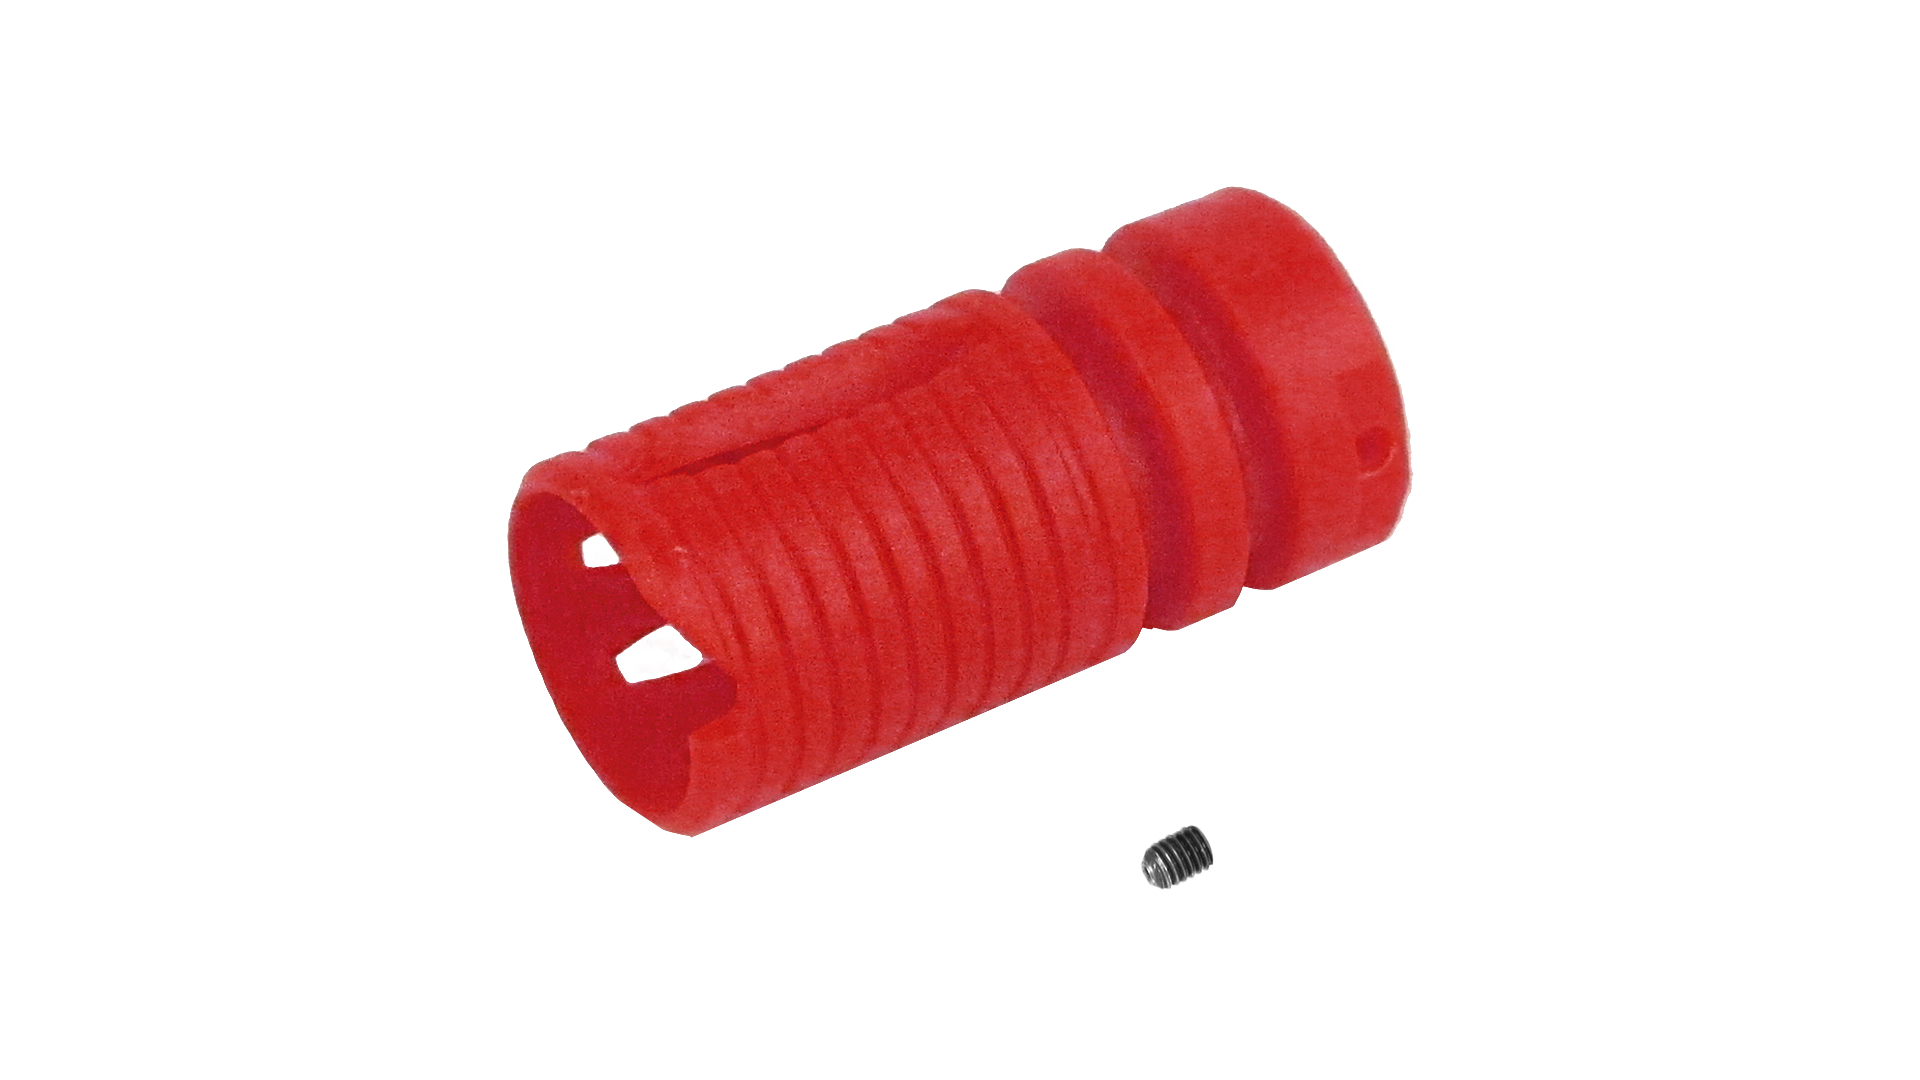 【MA-326】CS4 PLASTIC RED FLASH HIDER